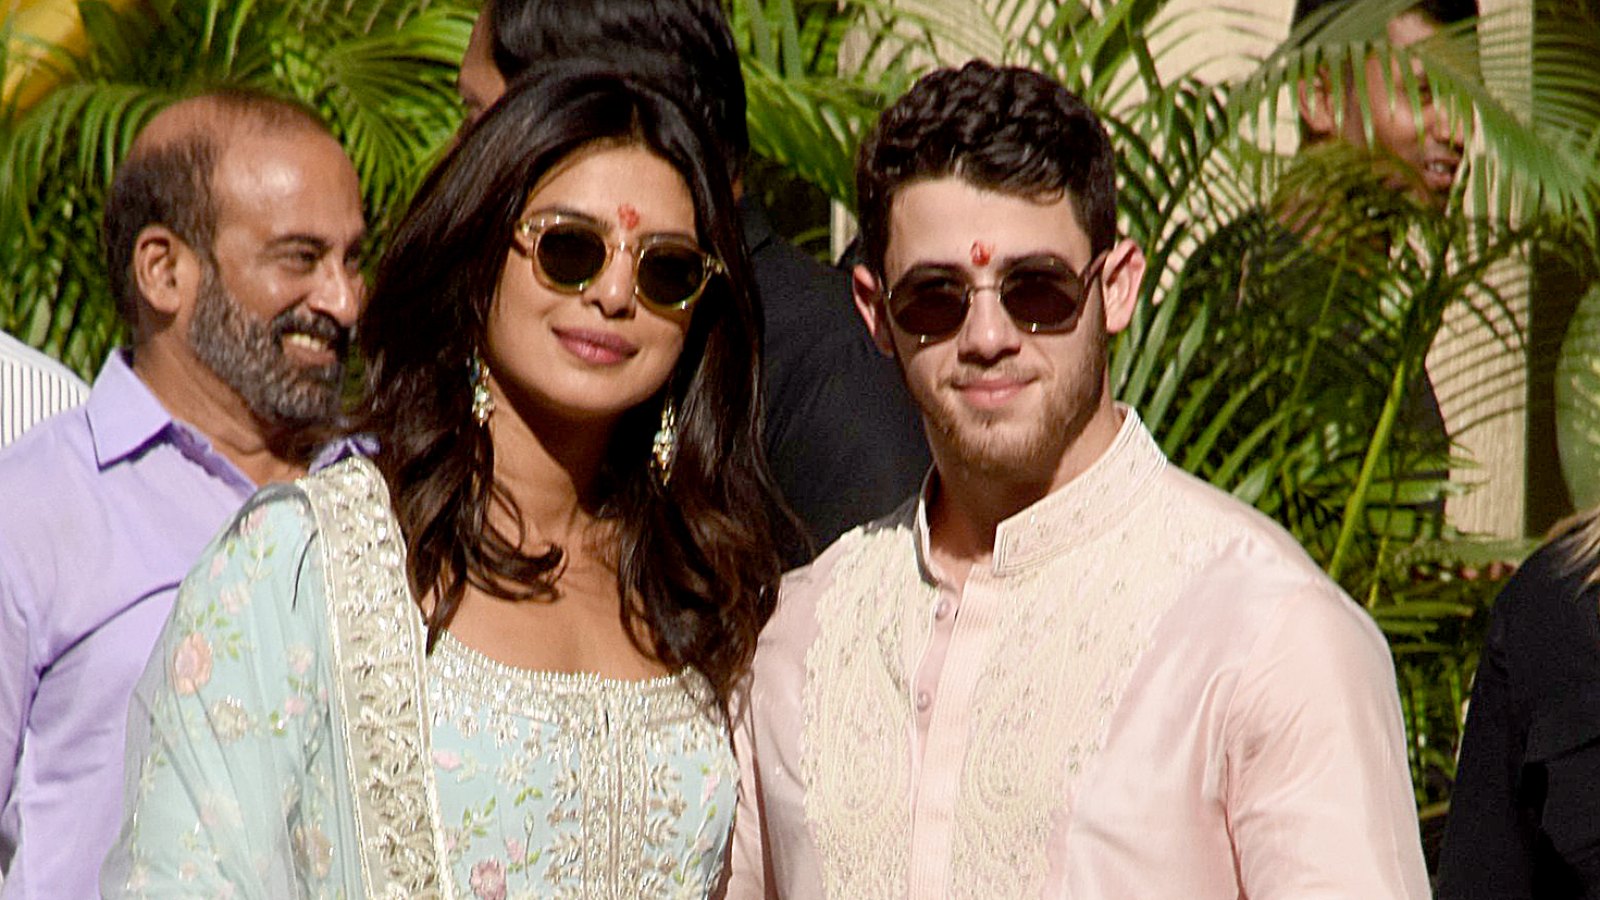 Priyanka-Chopra-and-Nick-Jonas-two-wedding-ceremonies